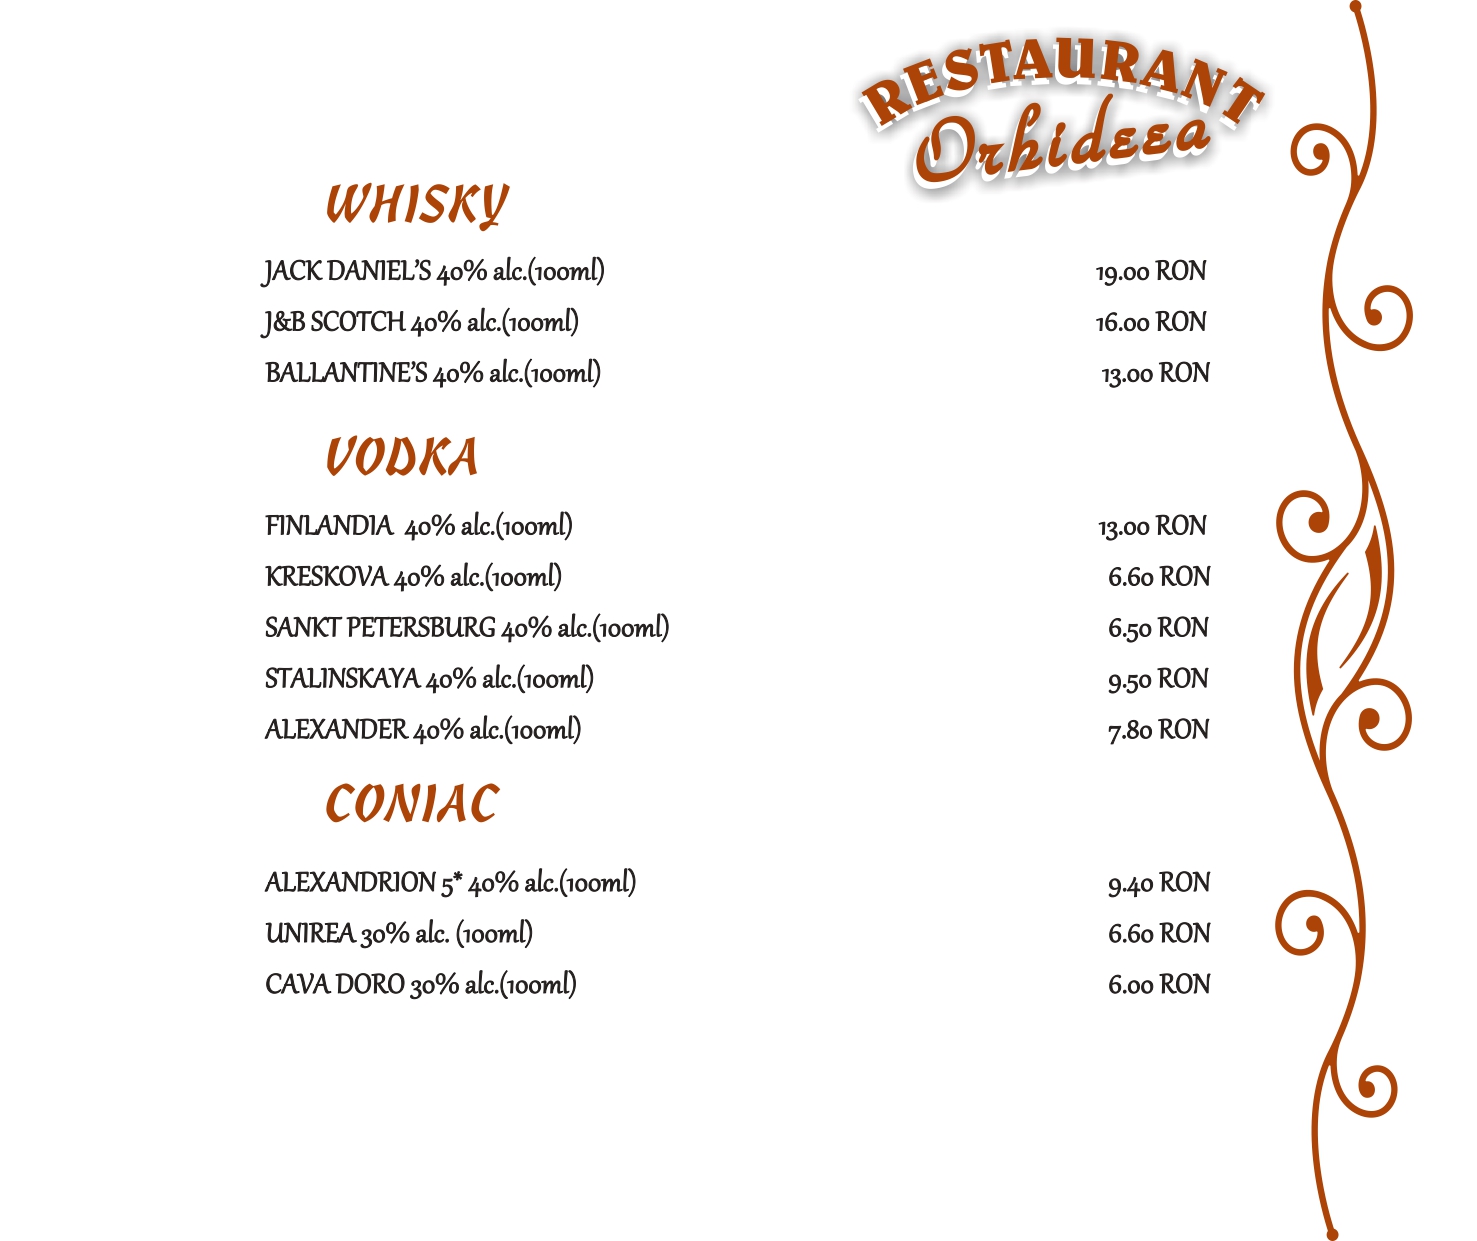 Meniu Restaurant Orhideea ornamental 2021_page-0013